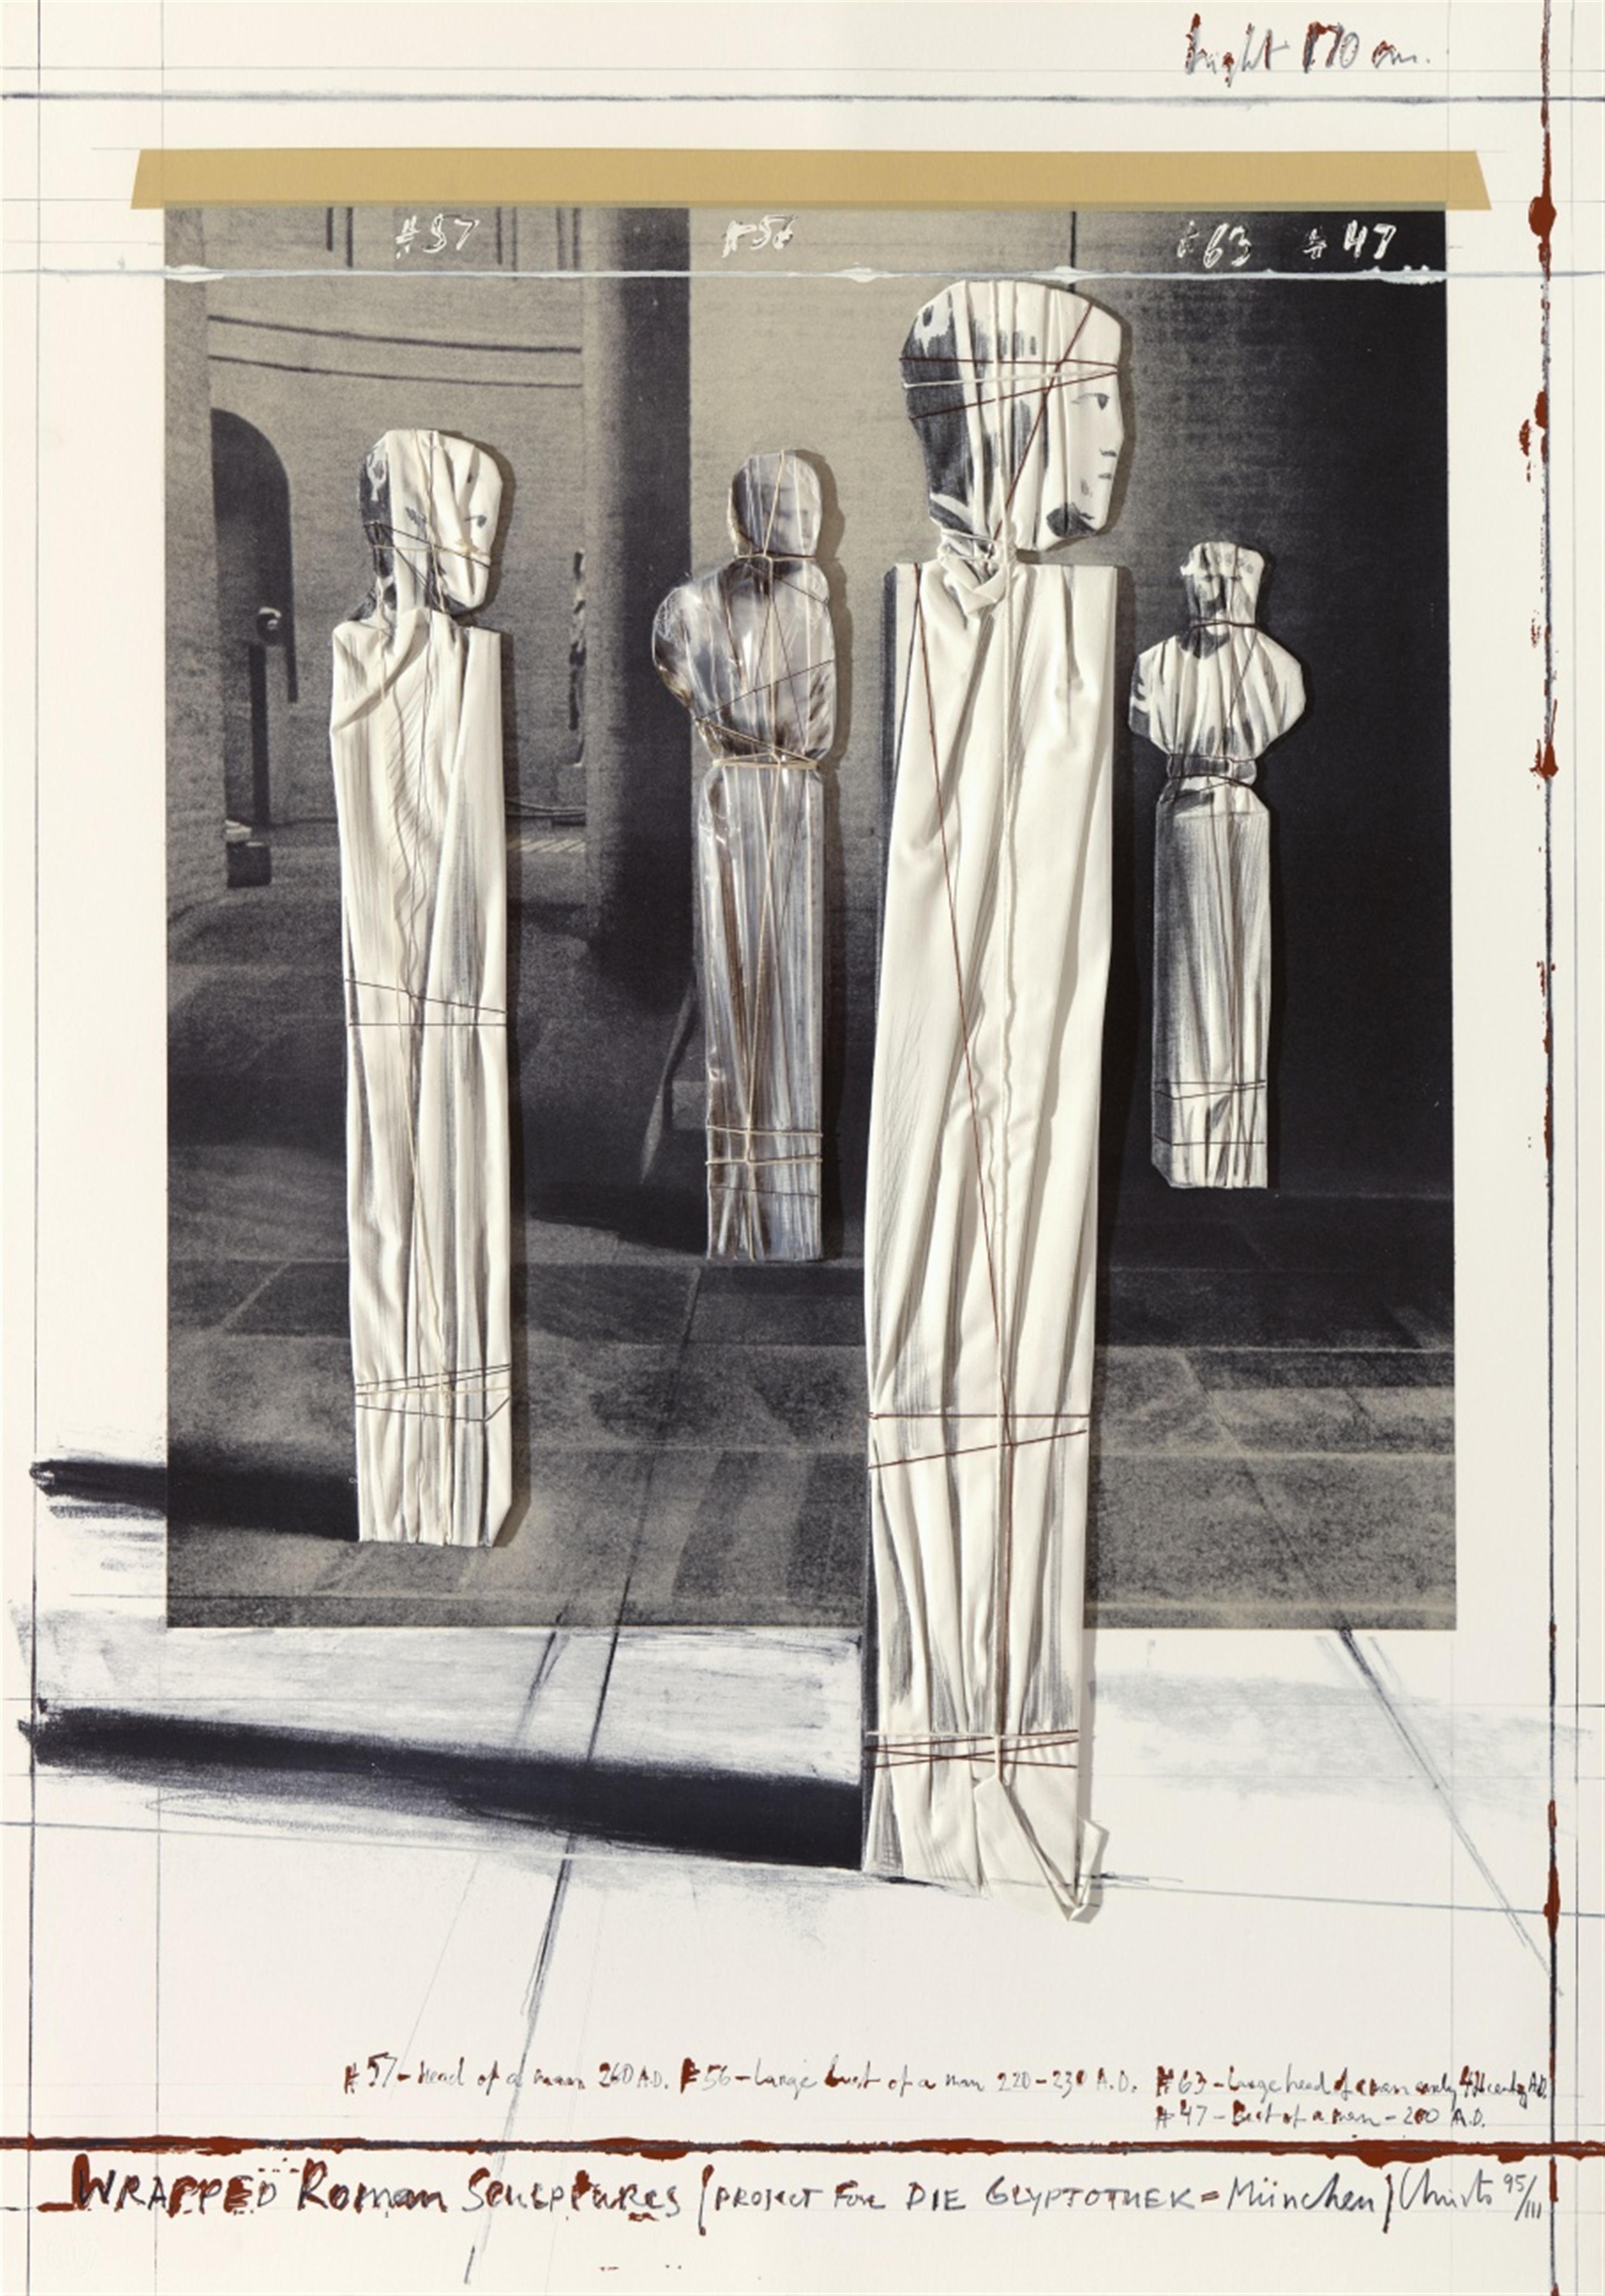 Christo - Wrapped Roman Sculptures, Project for Die Glyptothek, München - image-1